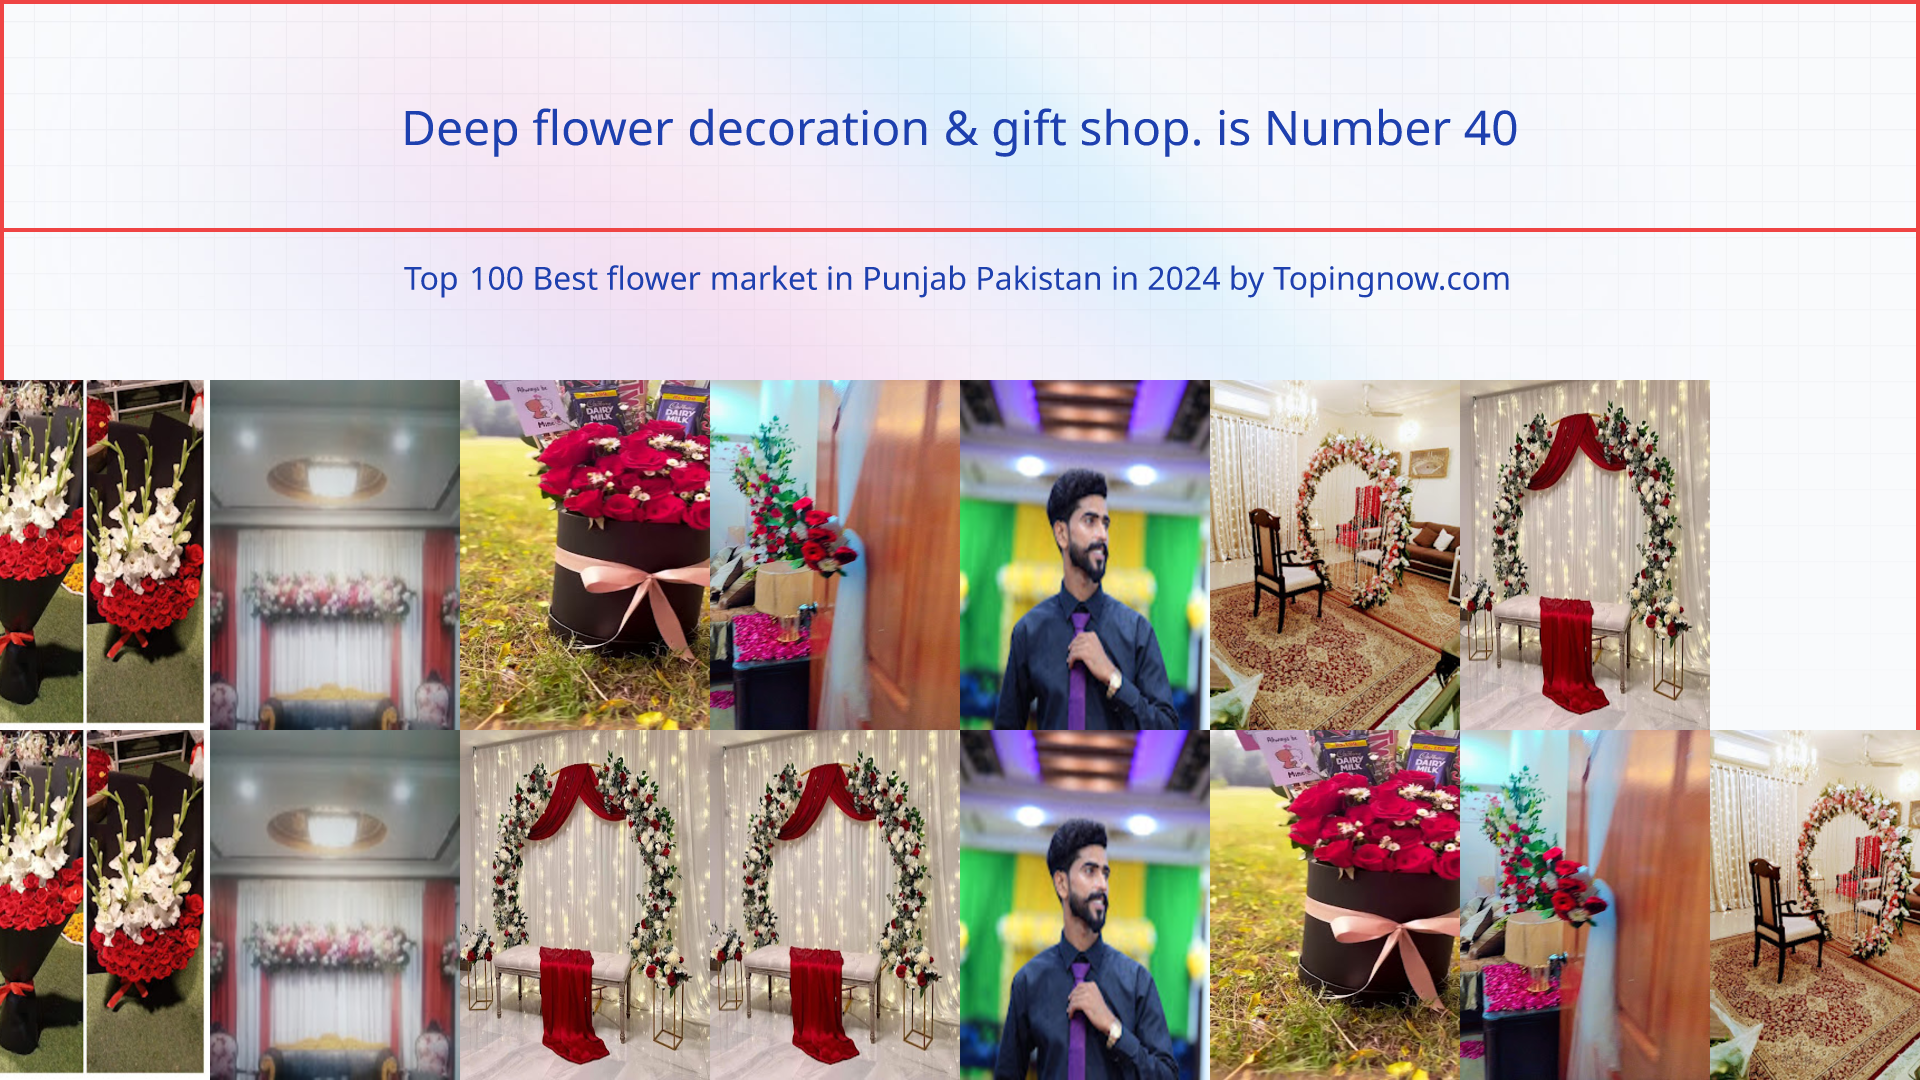 Deep flower decoration & gift shop.: Top 100 Best flower market in Punjab Pakistan in 2024